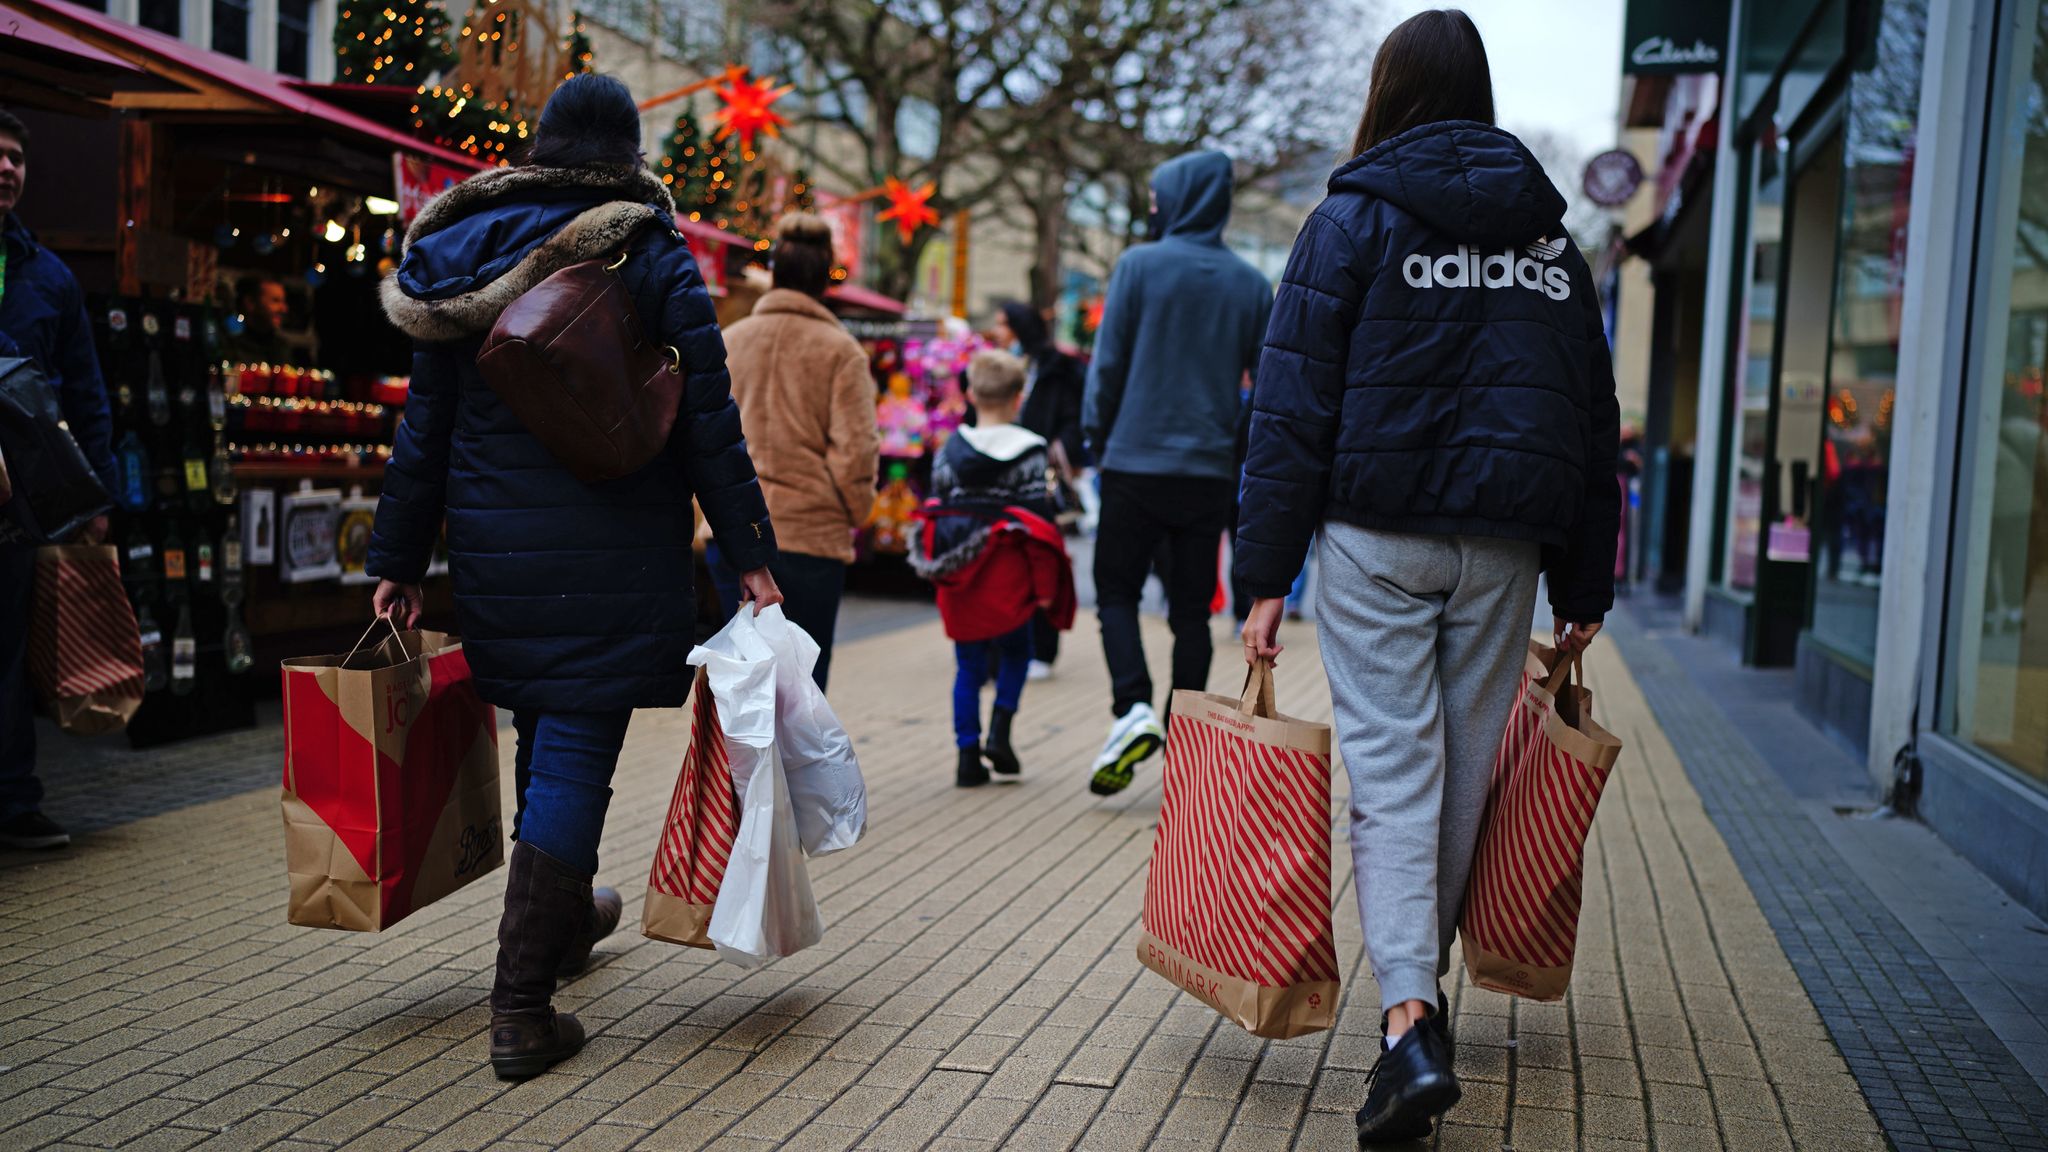 Asda's Christmas sales slide as shoppers rein in spending